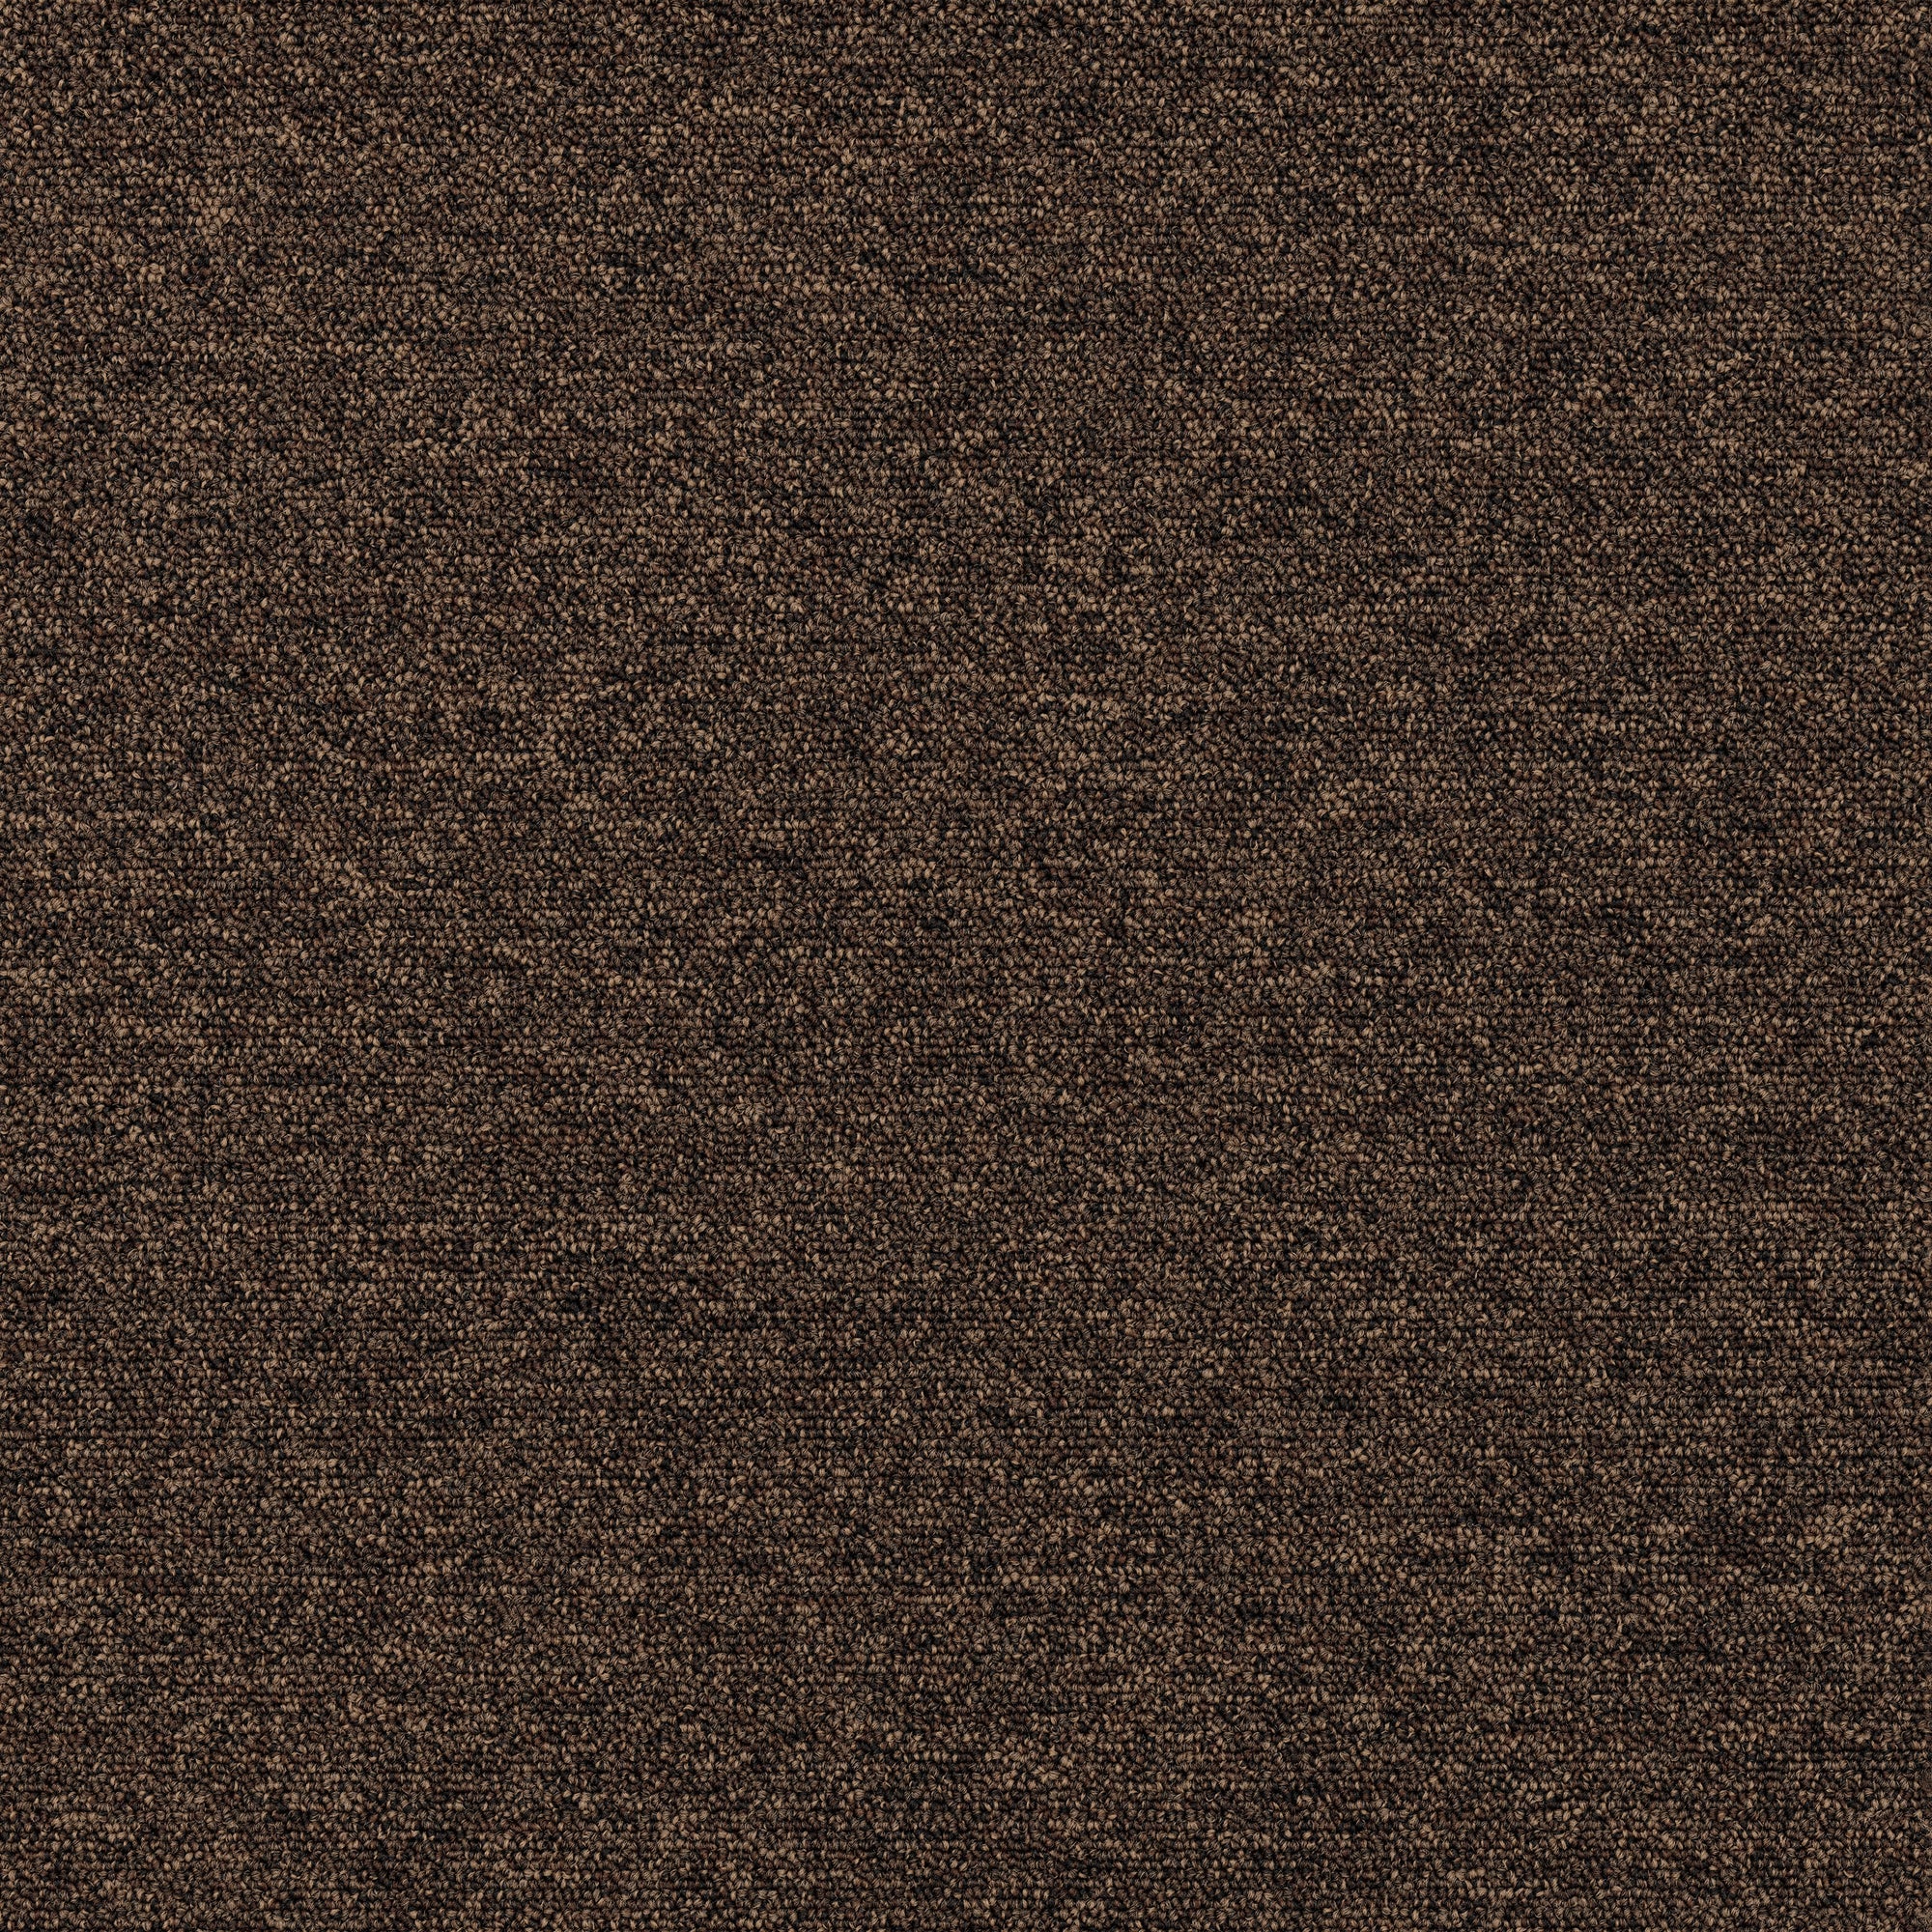 Plusfloor New Viilea Earth Brown carpet tiles for offices 100% Nylon